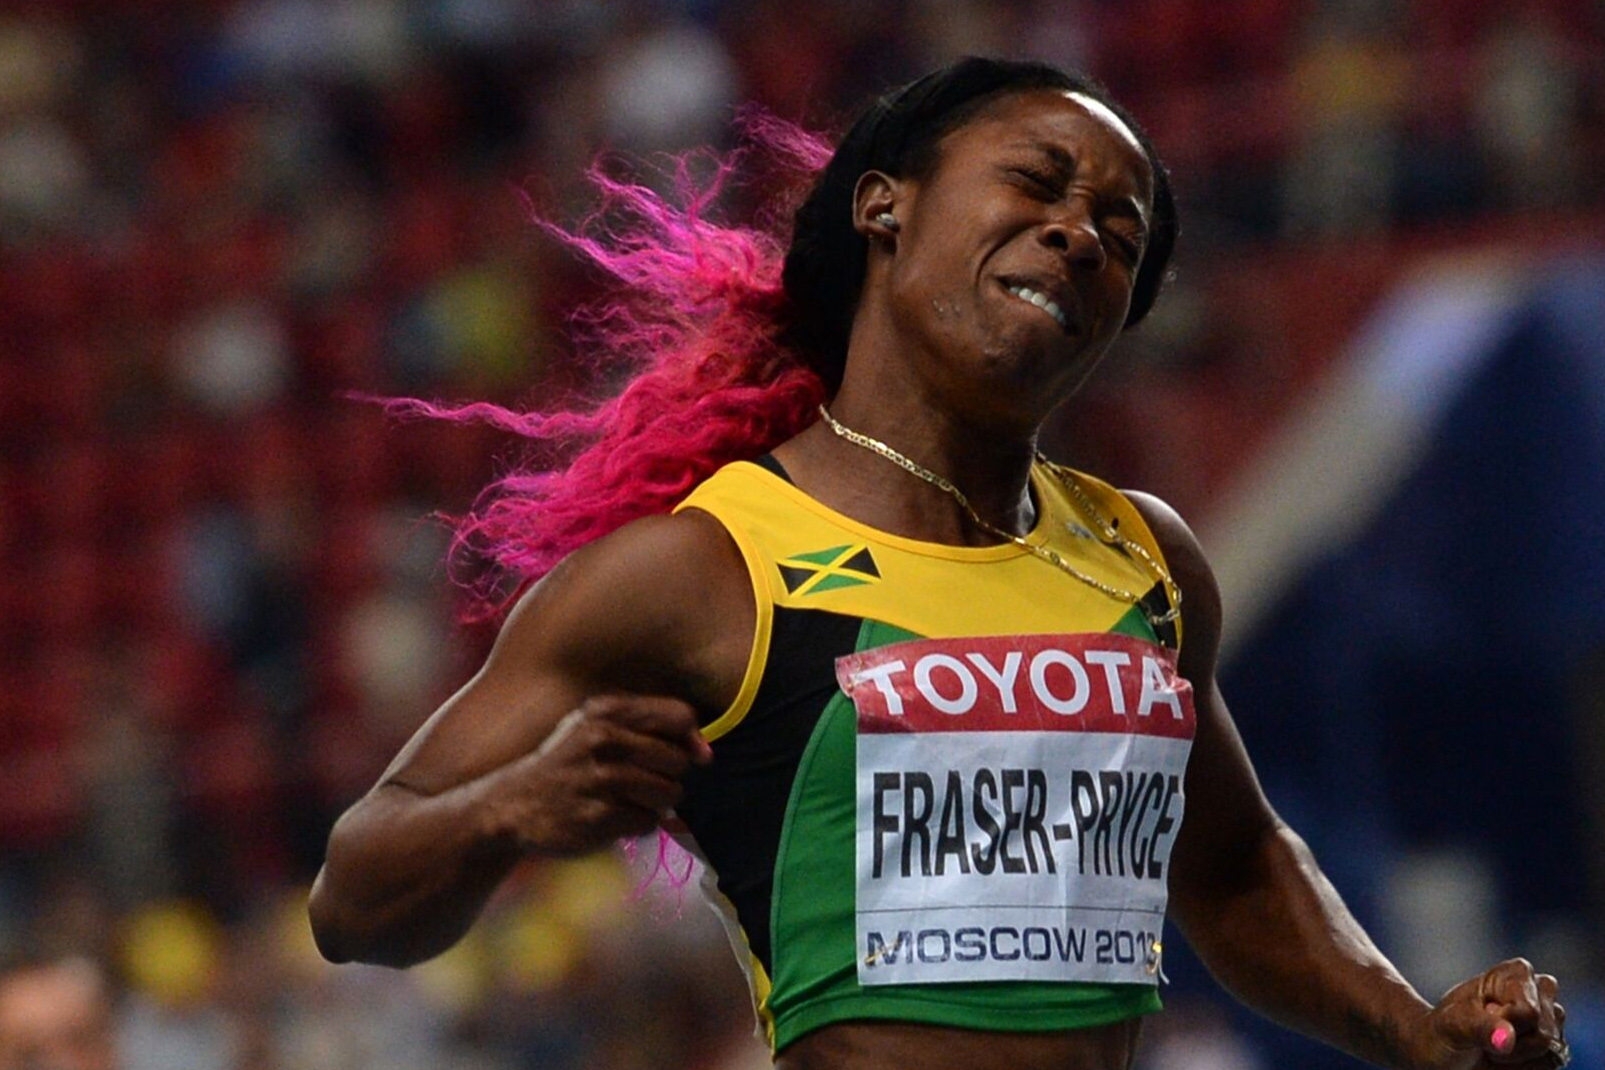 Ямайка отказалась от участия в забеге на 100 метров на Играх после недопуска на стадион